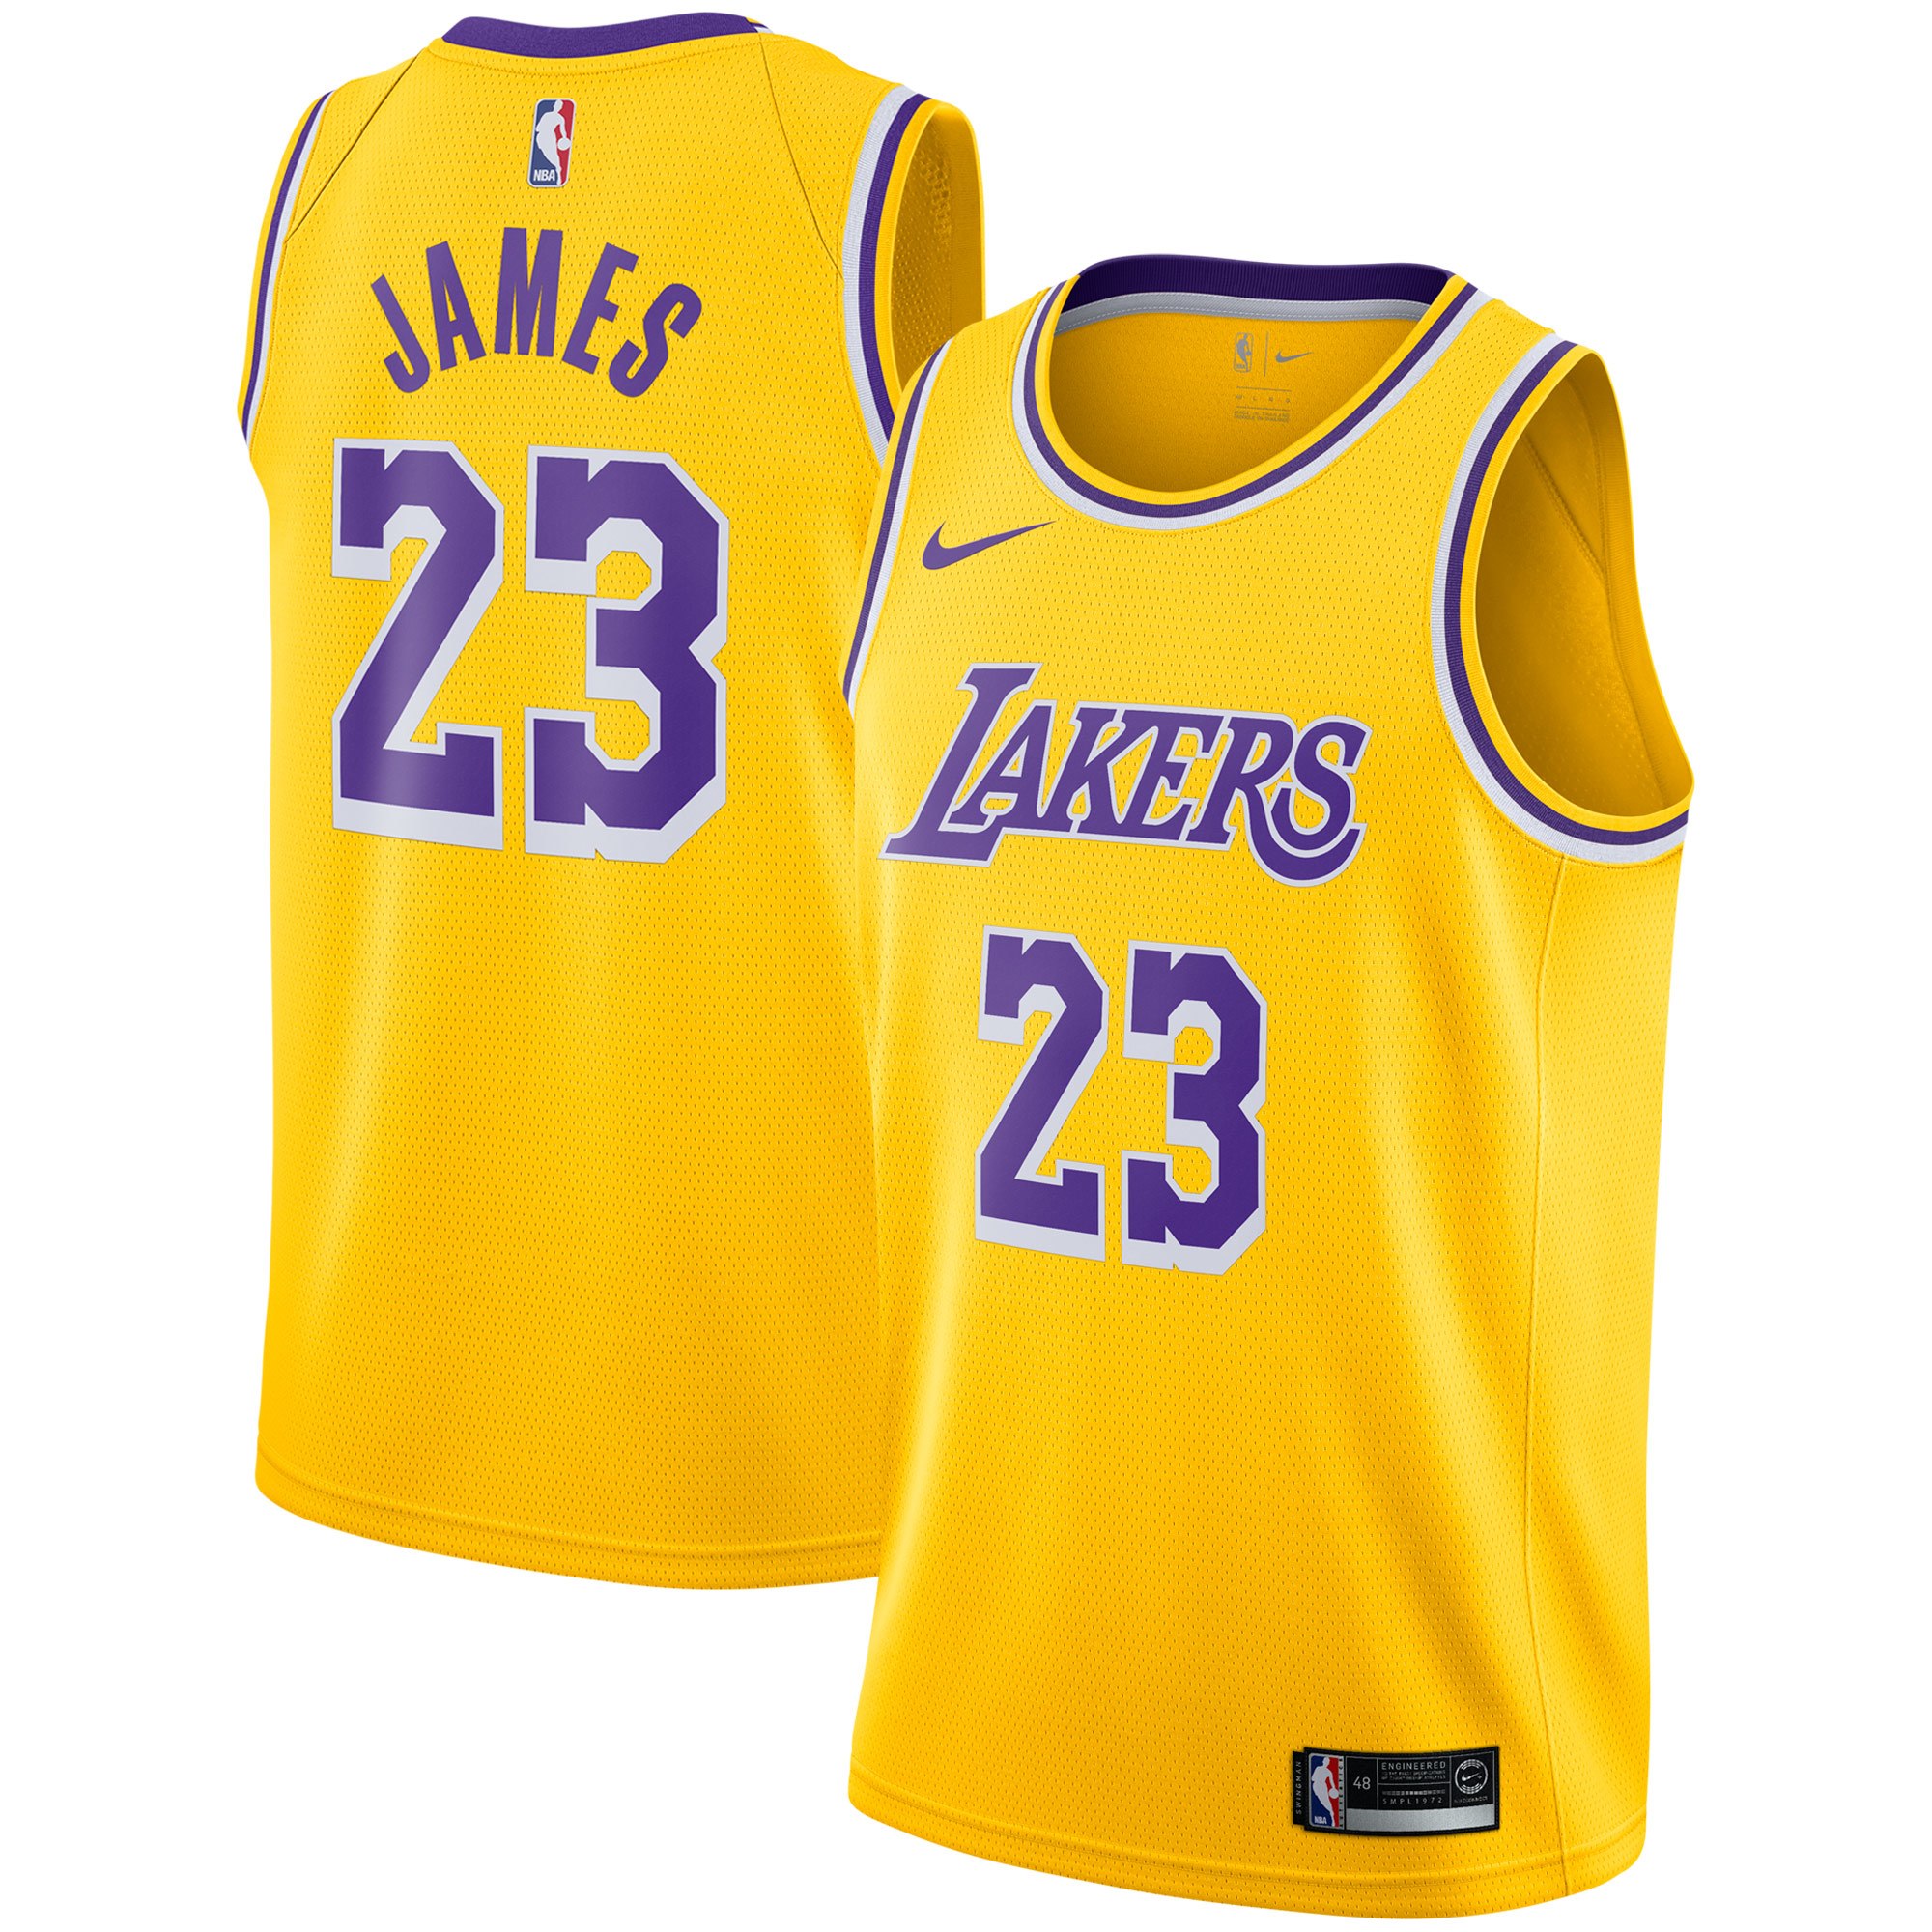 Camiseta de LeBron James de Los Angeles Lakers